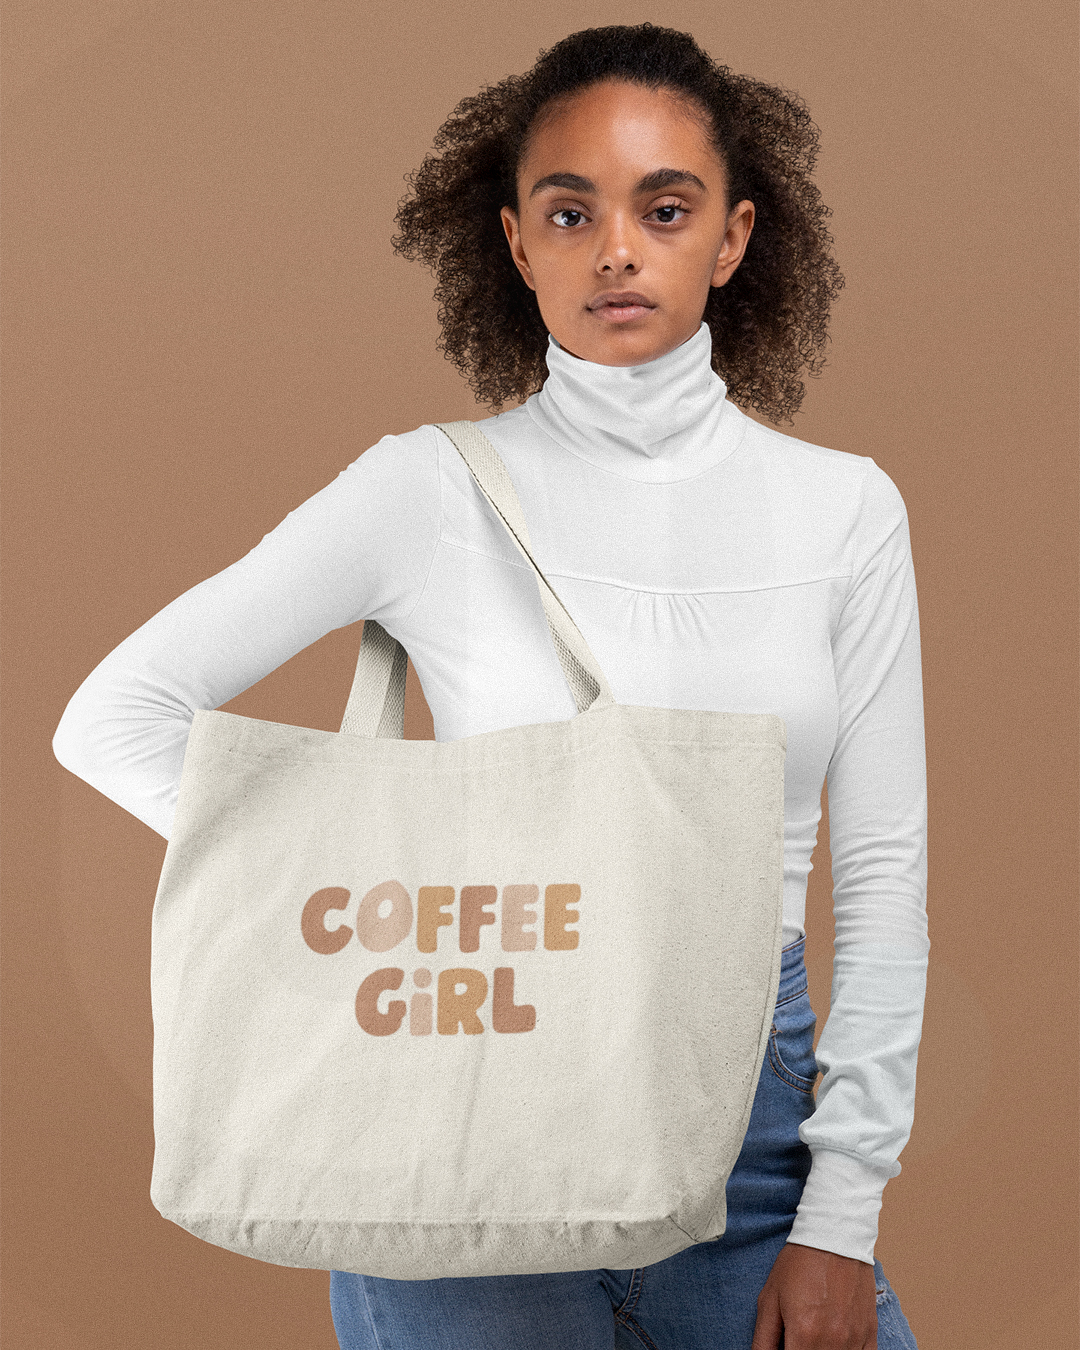 Coffee Girl Tote Bag - Coffee Girl Aesthetic Tote Bags Shopper - Coffee Girl Tote Bag Shopper